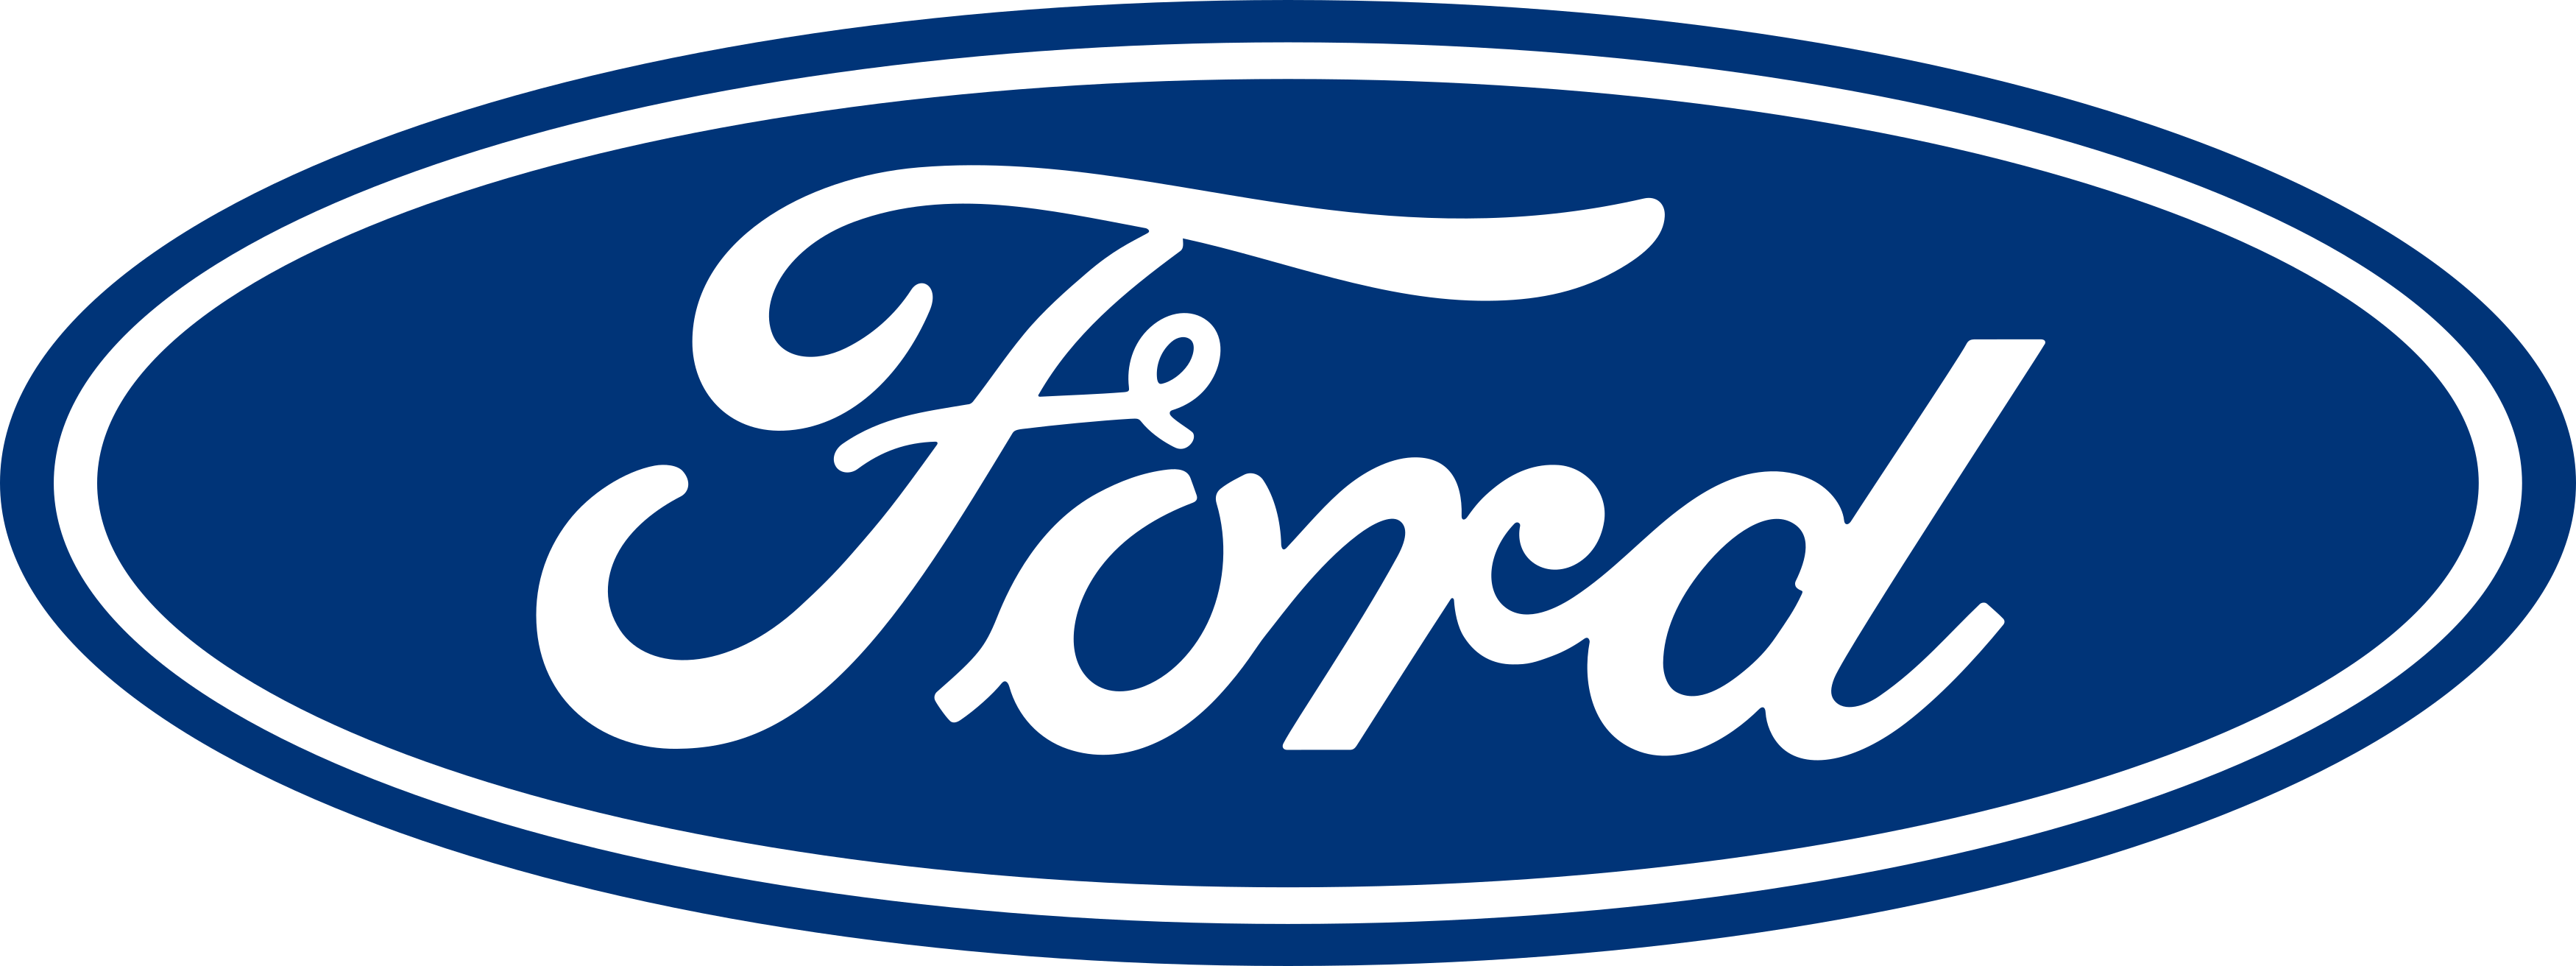 ford logo 1 1 - Ford Logo